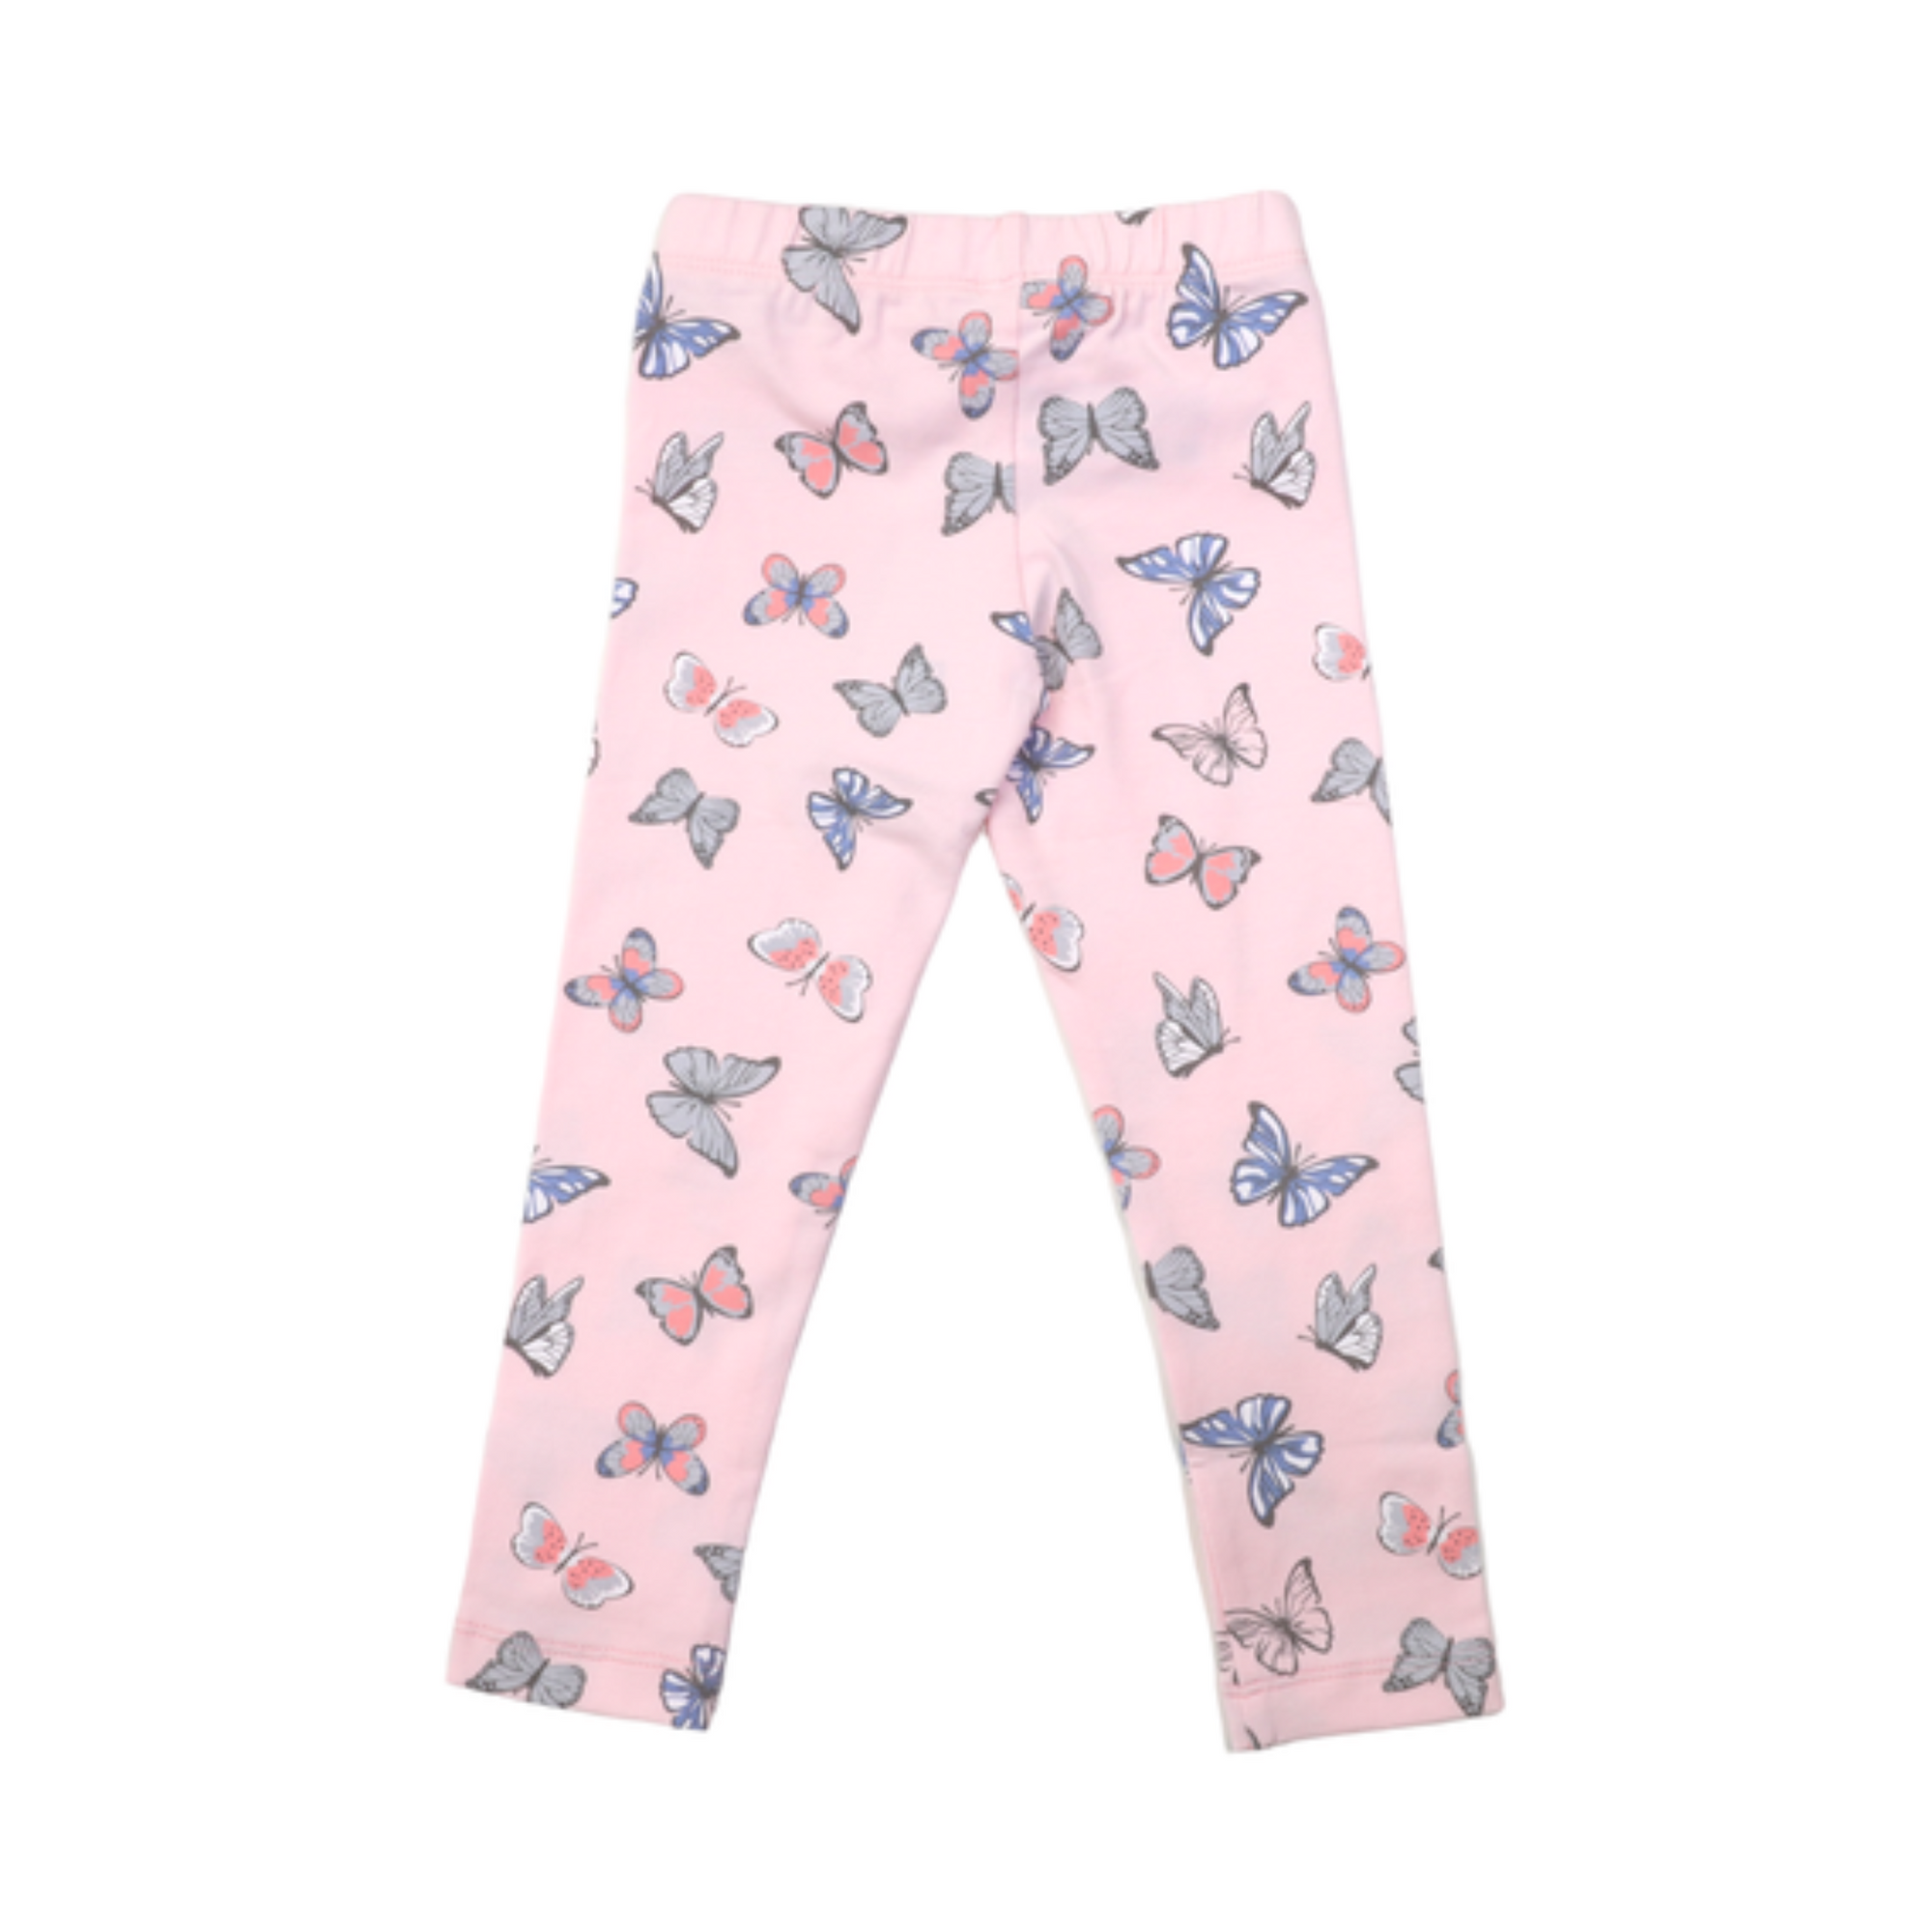 Korango Butterfly Print Legging - Fairytale  Pink